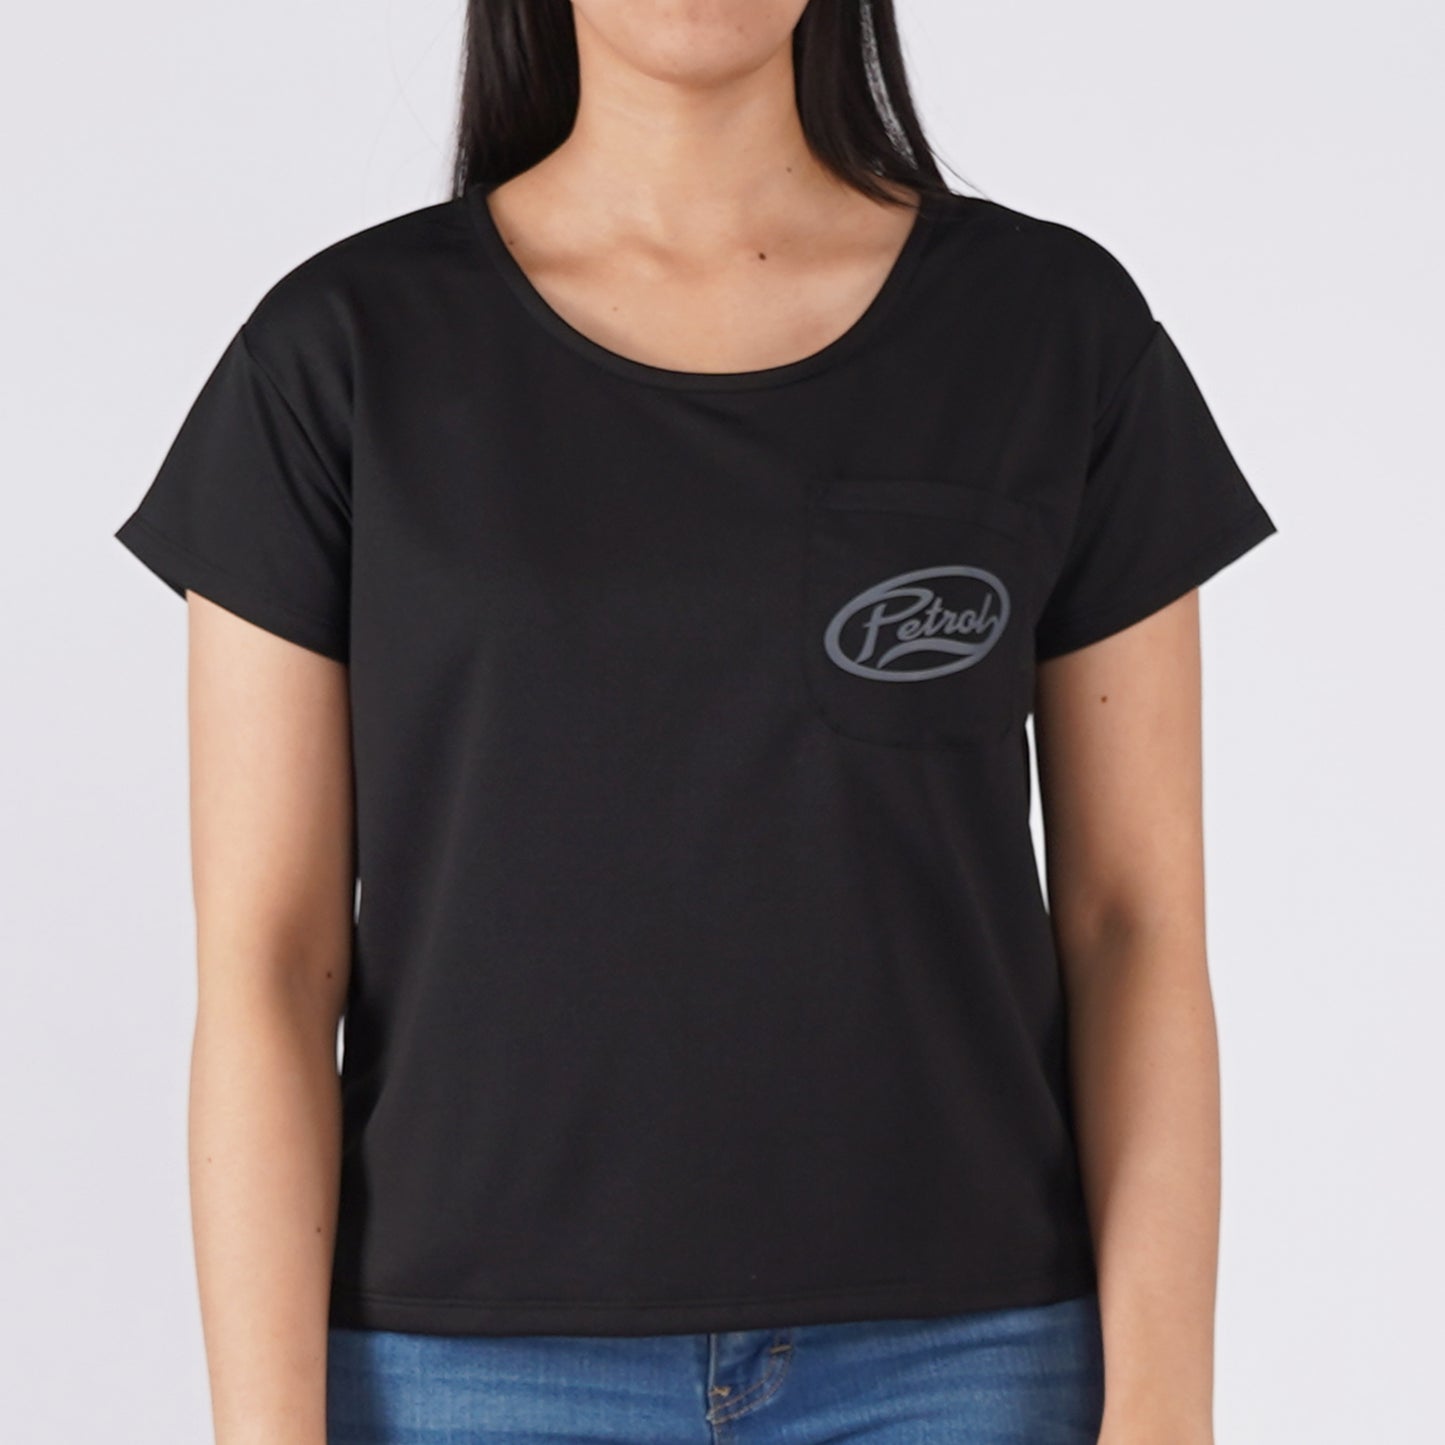 Petrol Basic Tees for Ladies Boxy Fitting Shirt CVC Jersey Fabric Trendy fashion Casual Top Black T-shirt for Ladies 130331-U (Black)